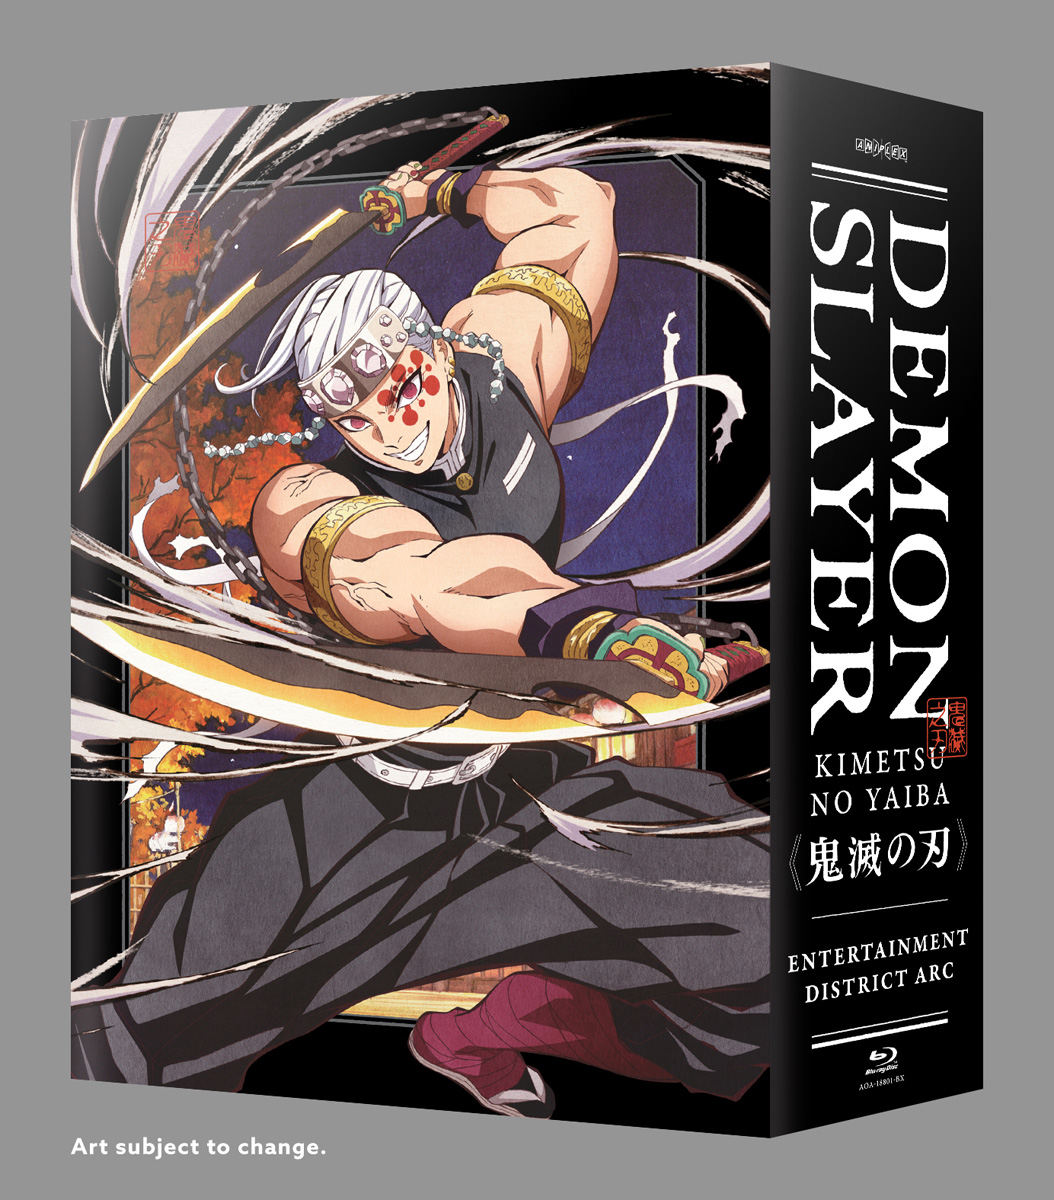 Demon Slayer Kimetsu no Yaiba Entertainment District Arc Limited Edition Blu-ray image count 0